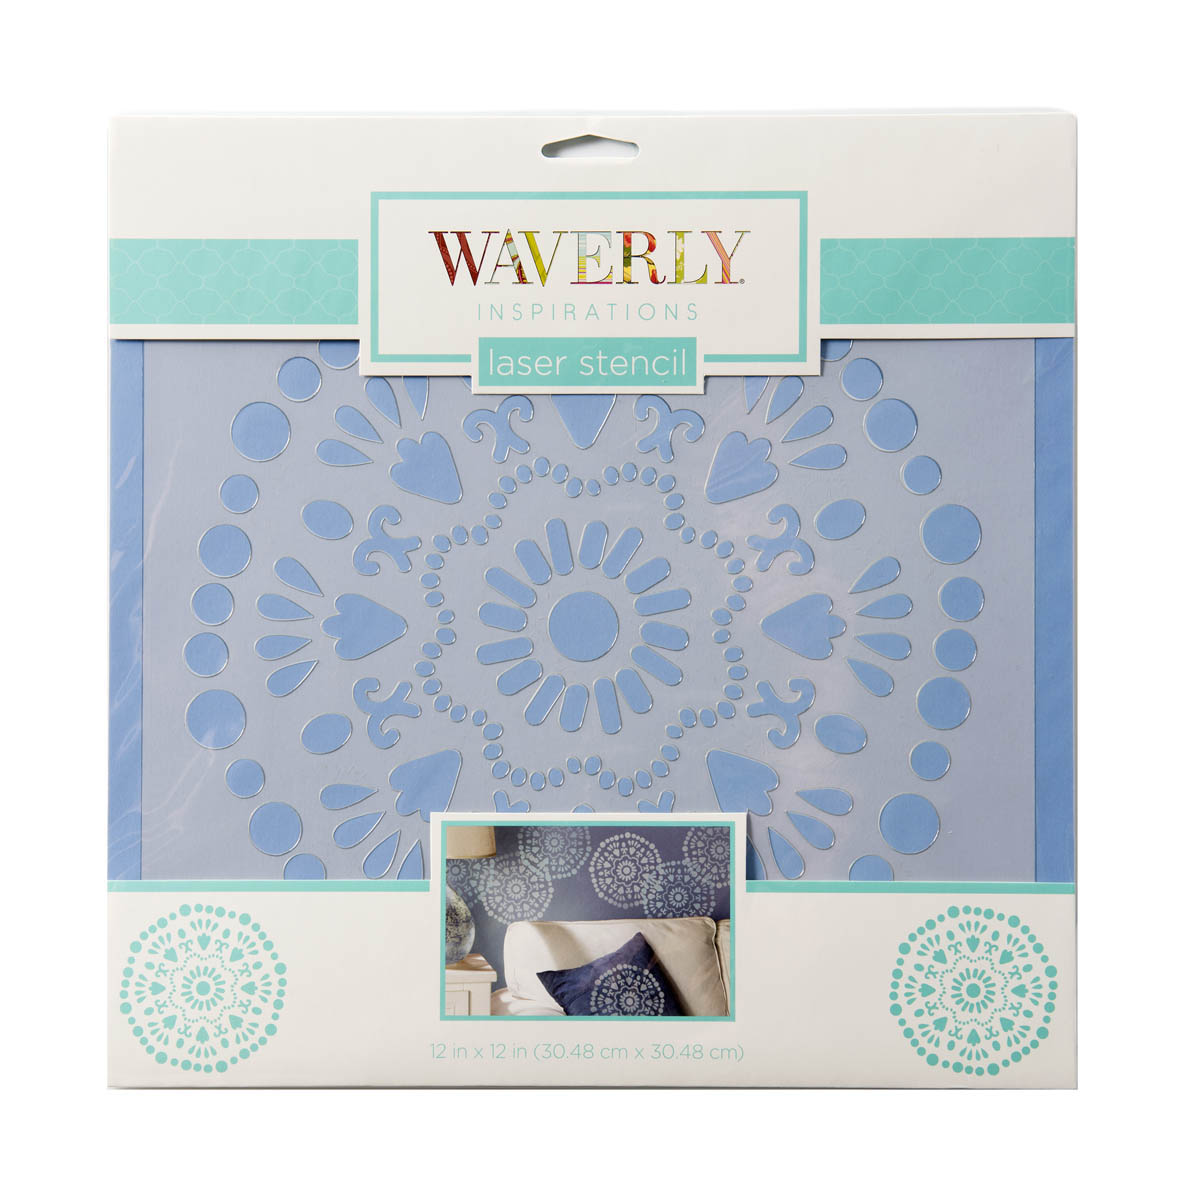 Waverly ® Inspirations Laser Stencils - Décor - Big Wheel, 12